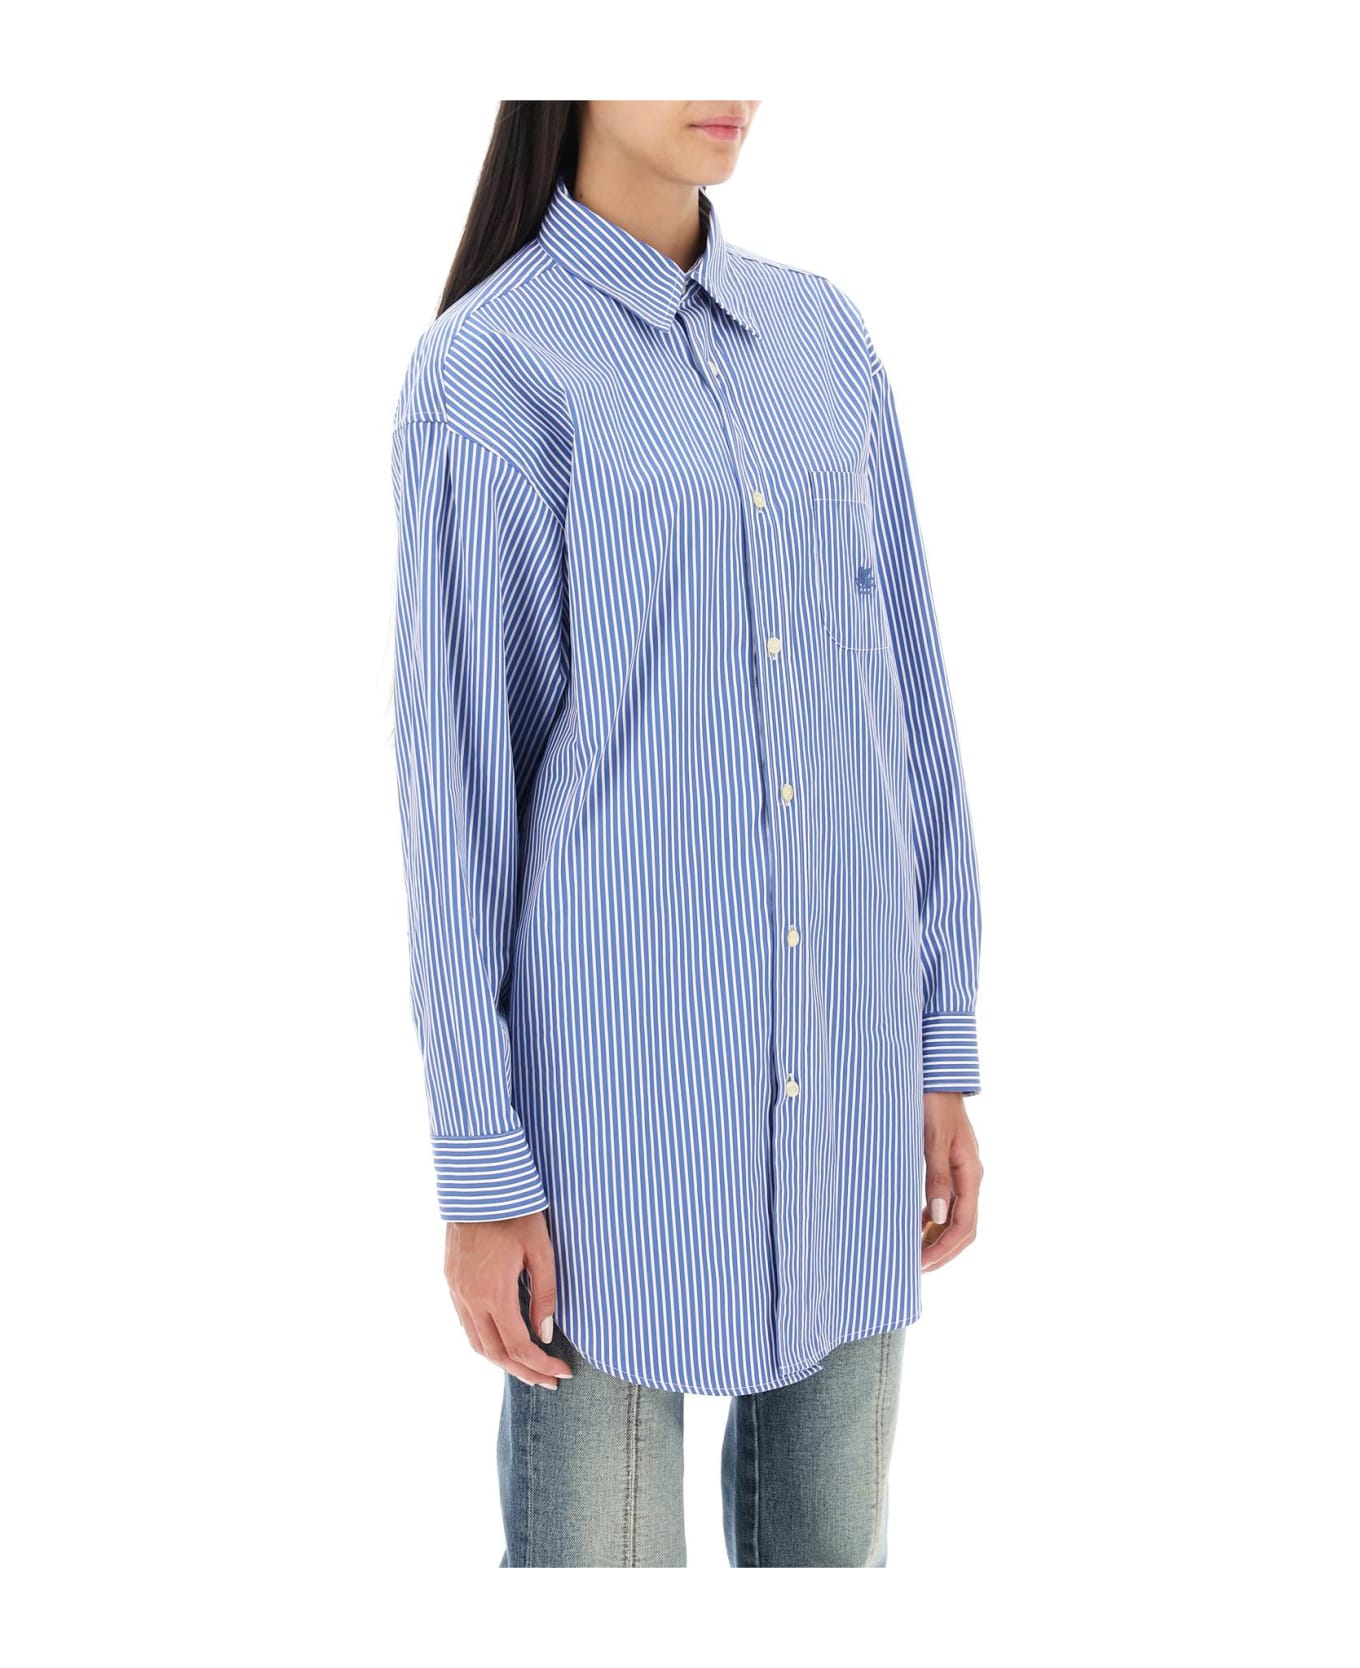 Etro Shirt - Blue